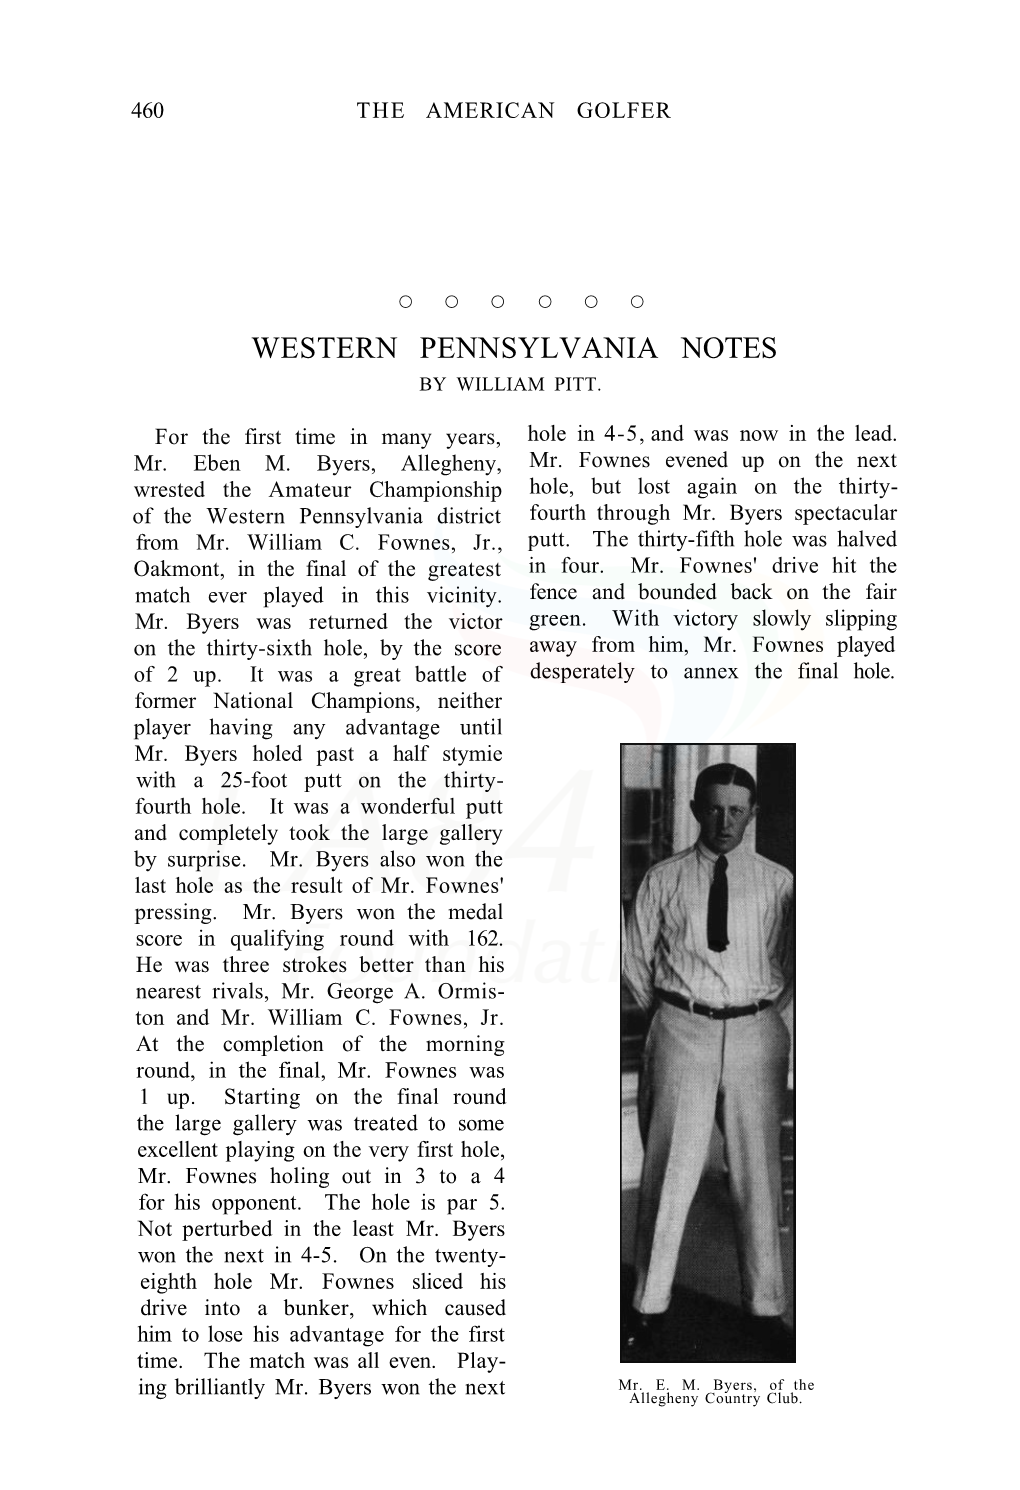 Western Pennsylvania Notes by William Pitt